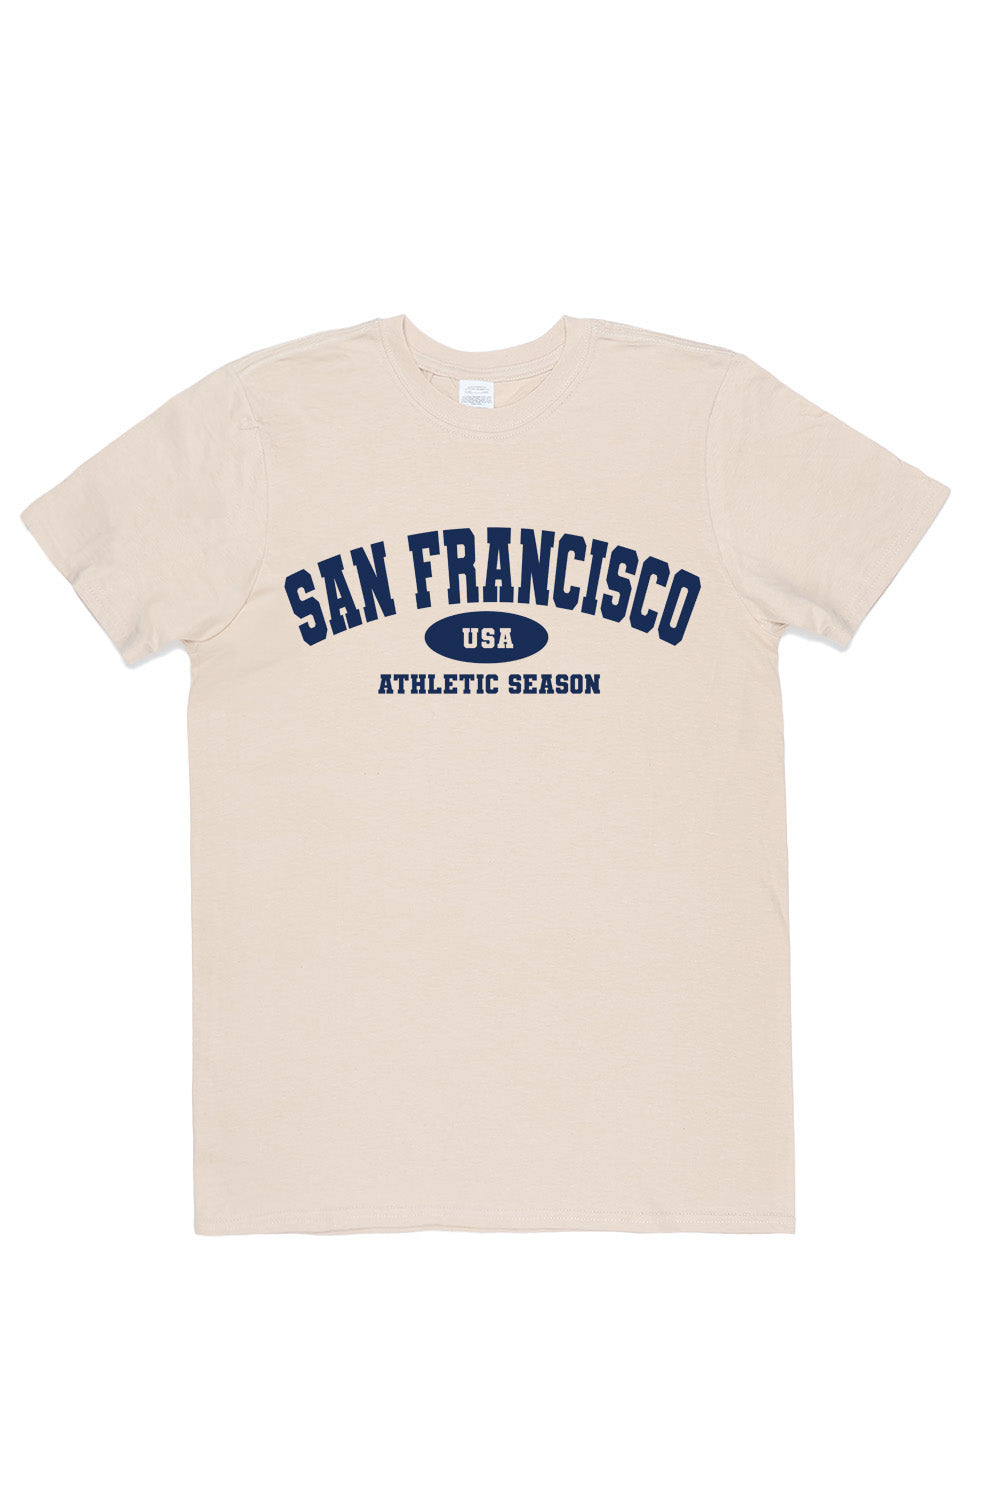 San Francisco T-Shirt in Sand (Custom Packs)